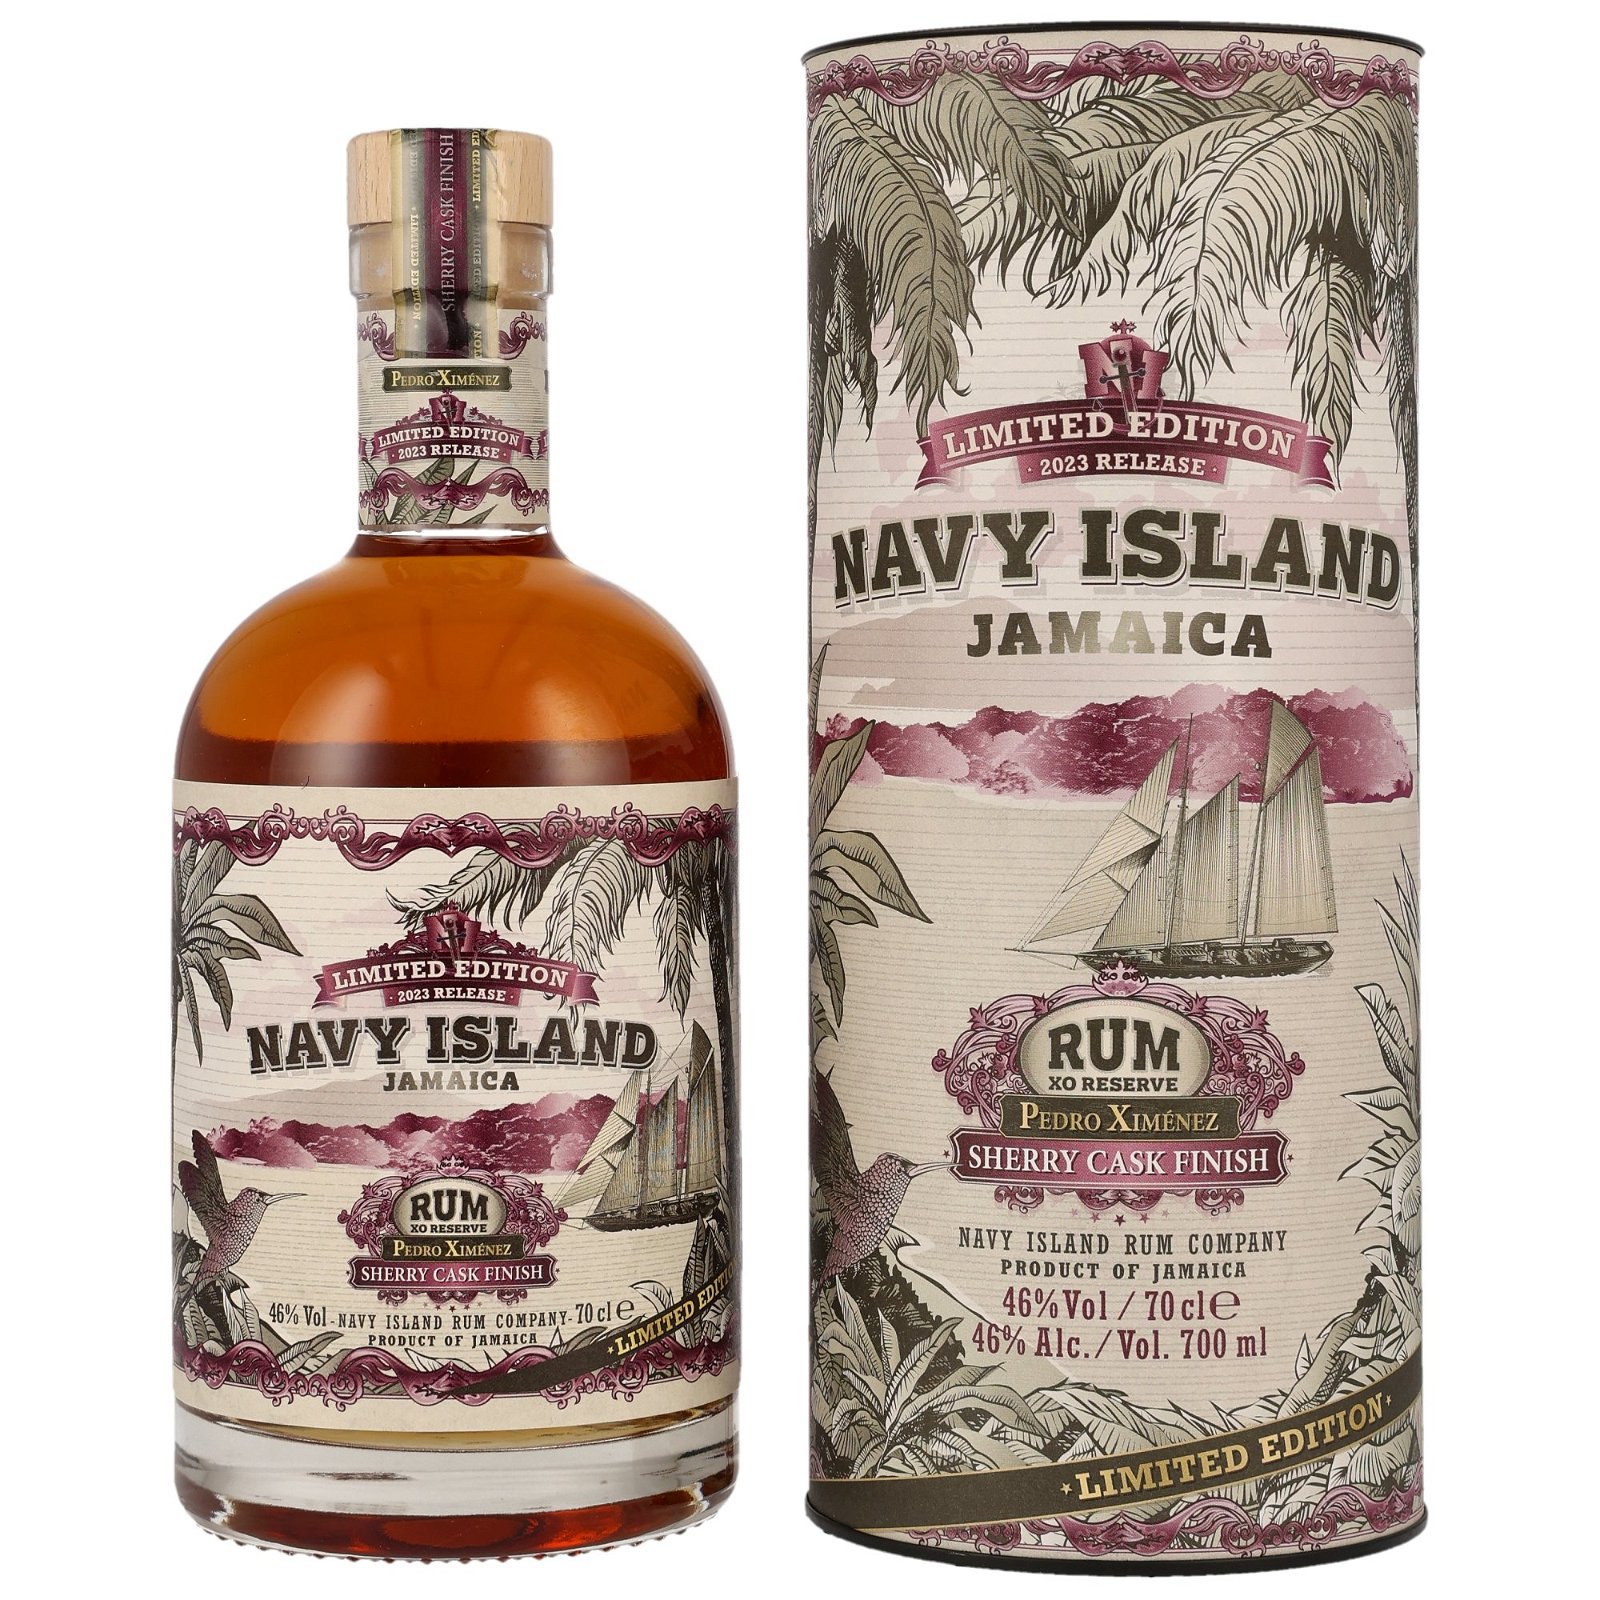 Navy Island Jamaica Rum XO Reserve PX Sherry Cask Finish